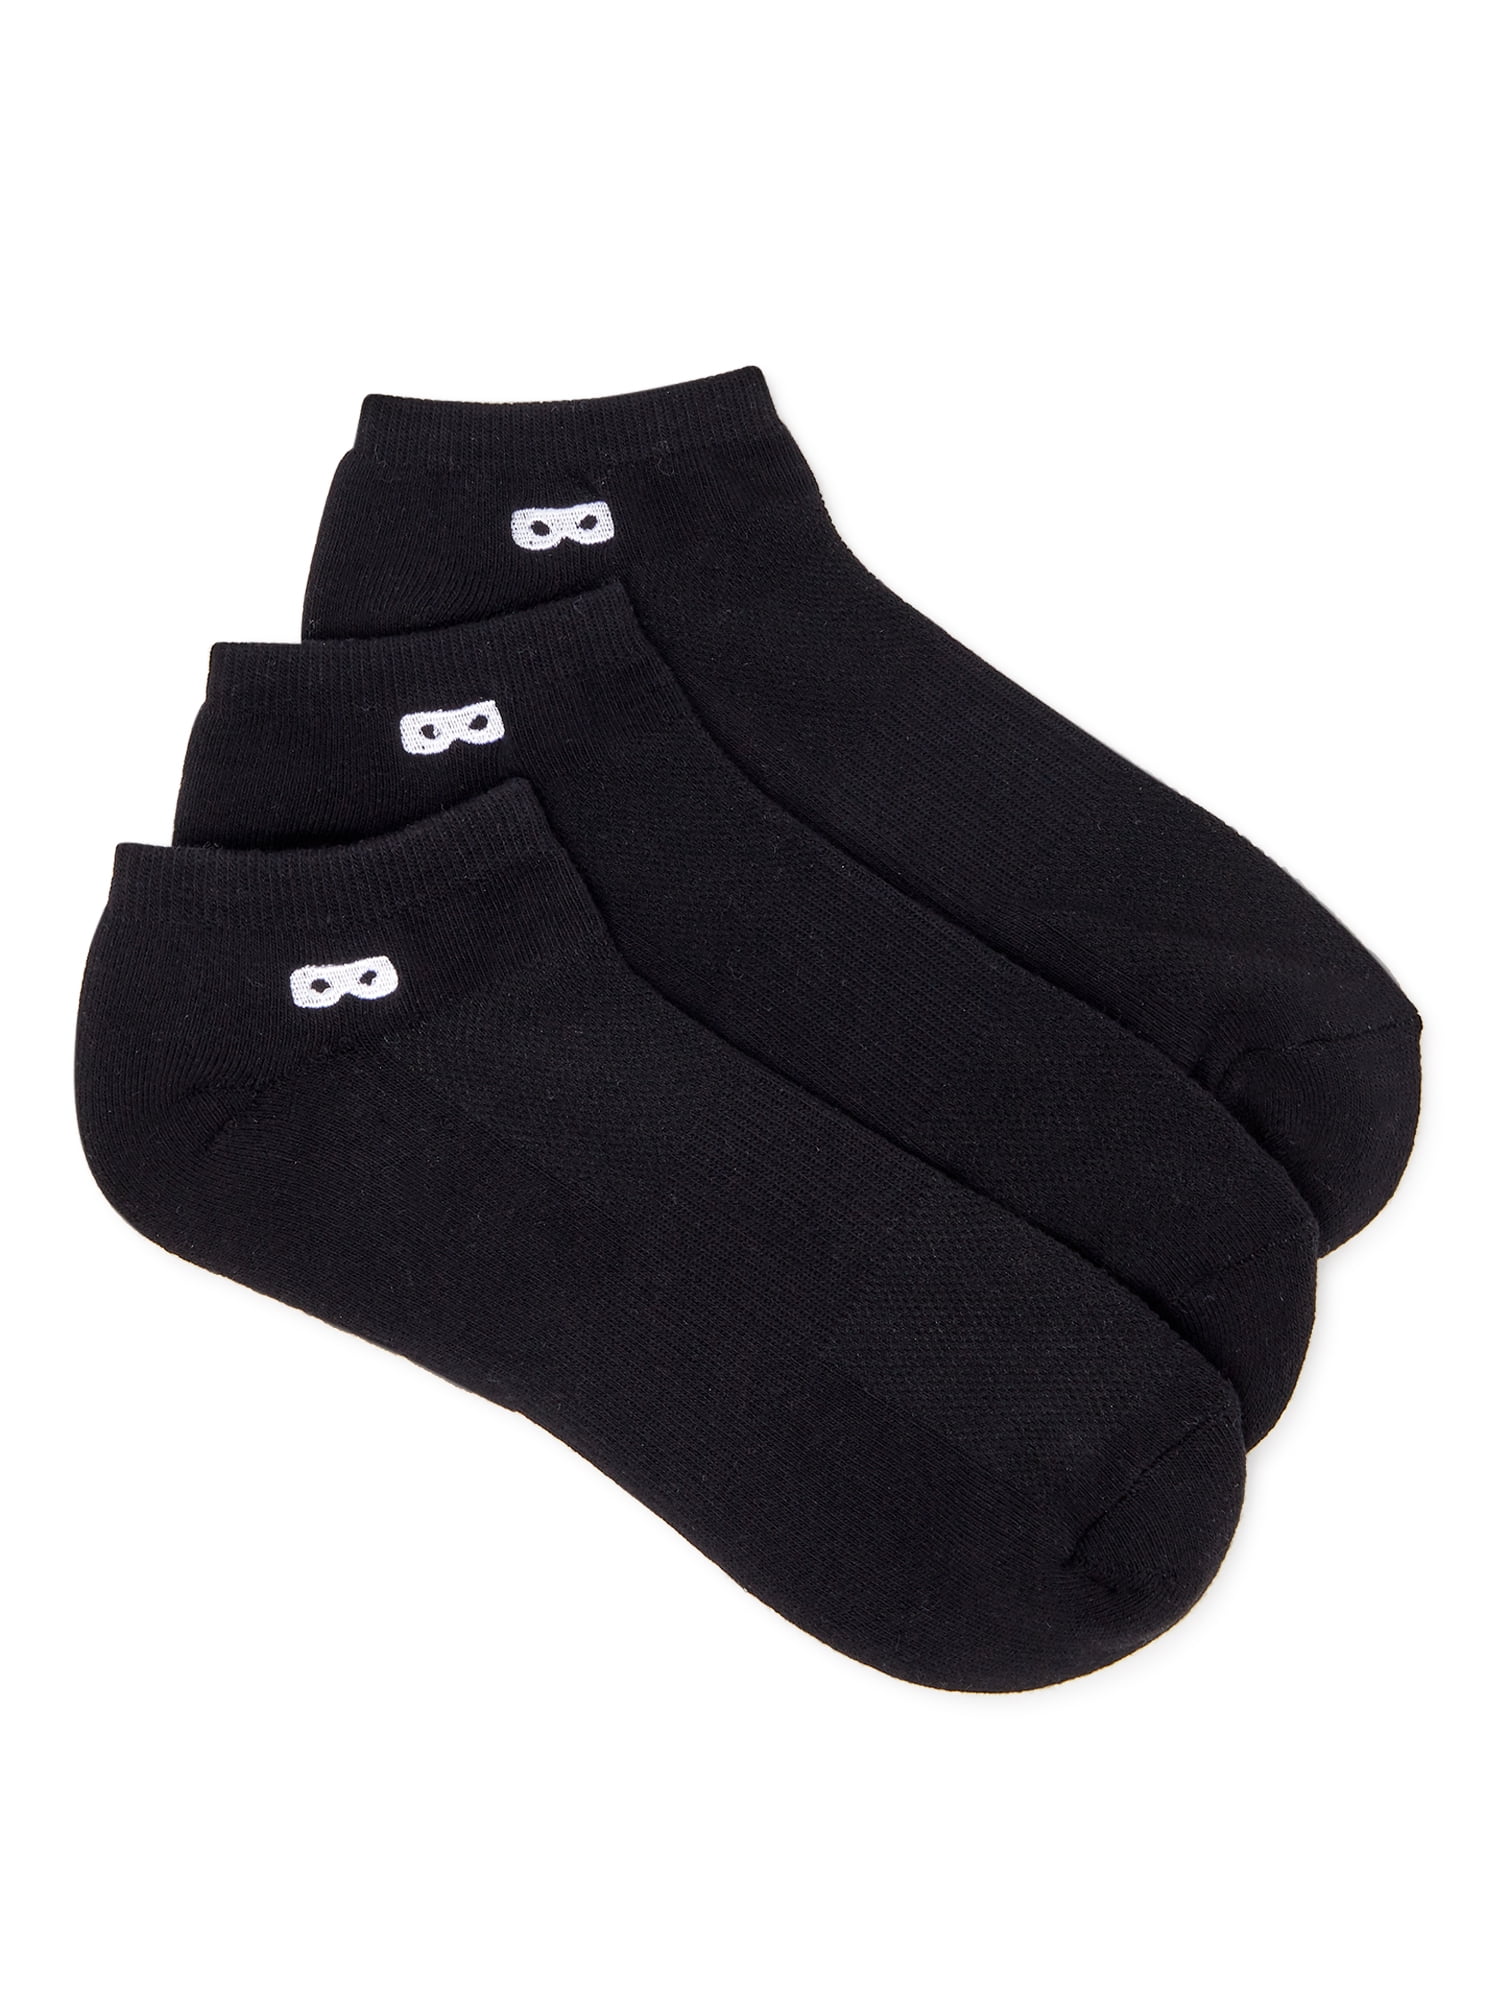 Pair of Thieves Men's Cushioned Low Cut Socks, 3-Pack - Walmart.com